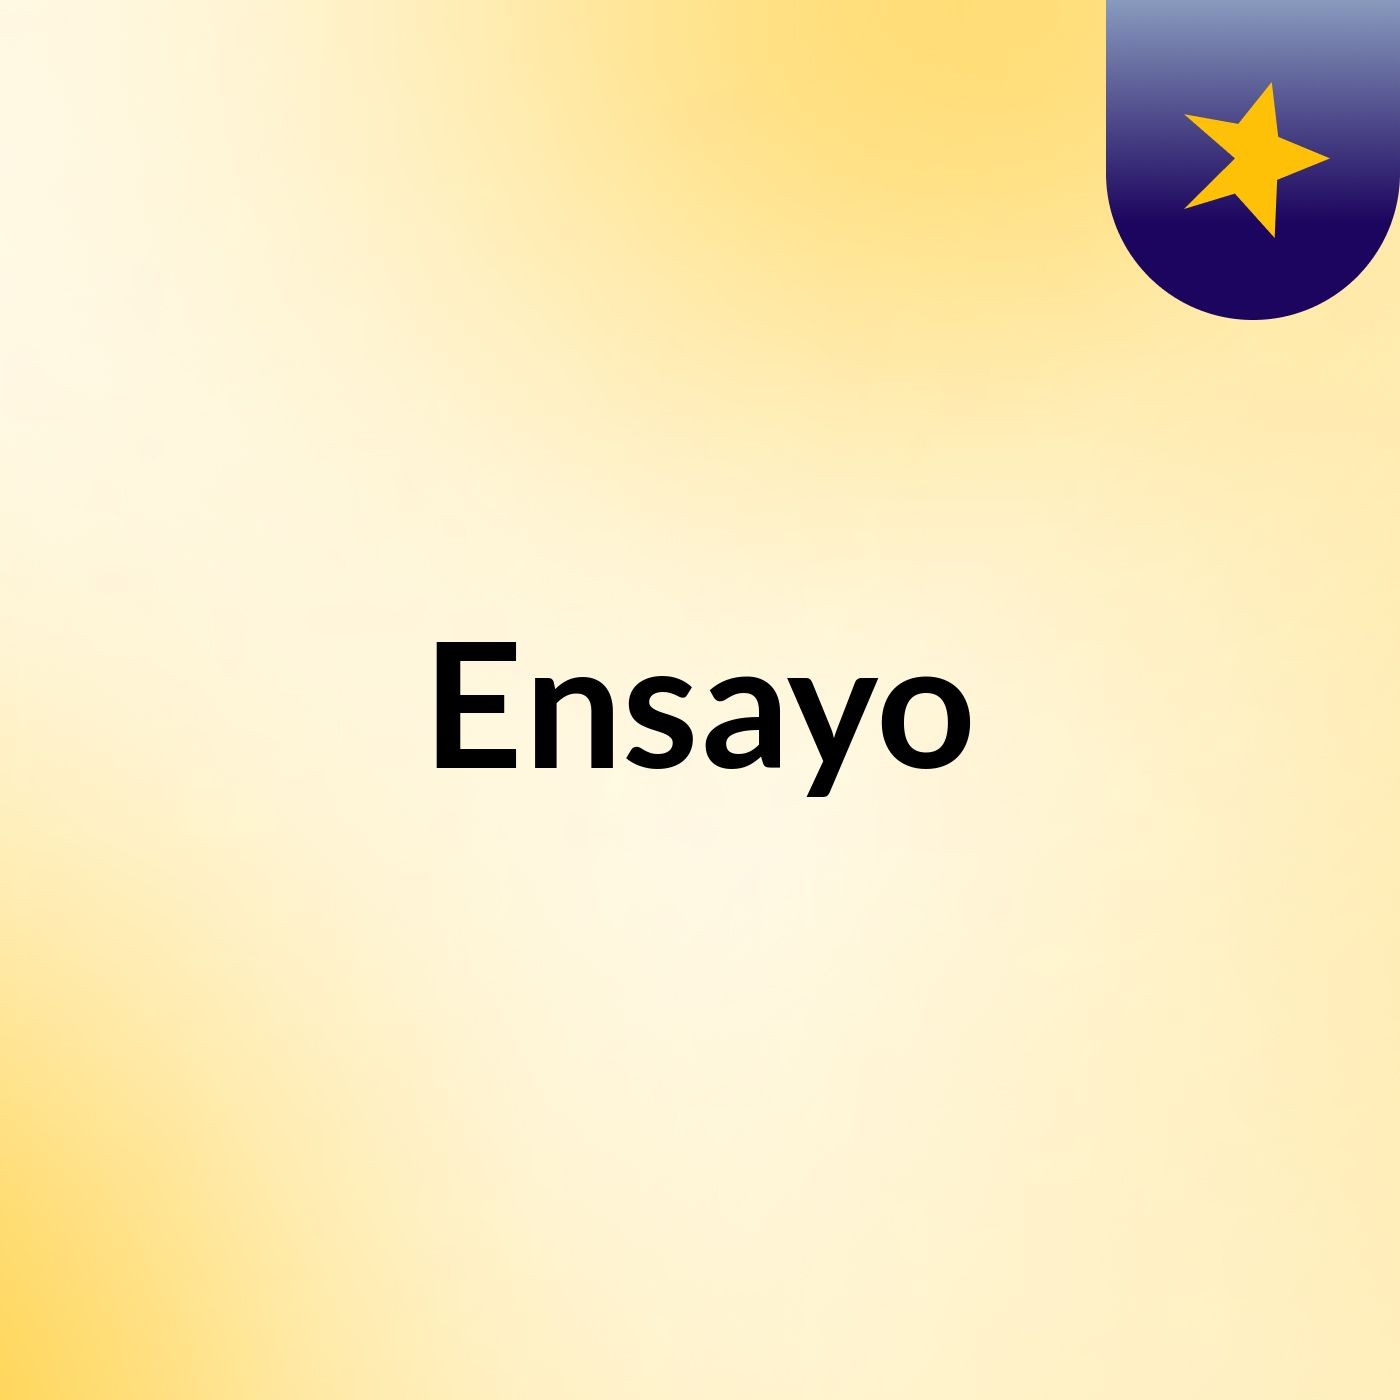 Ensayo